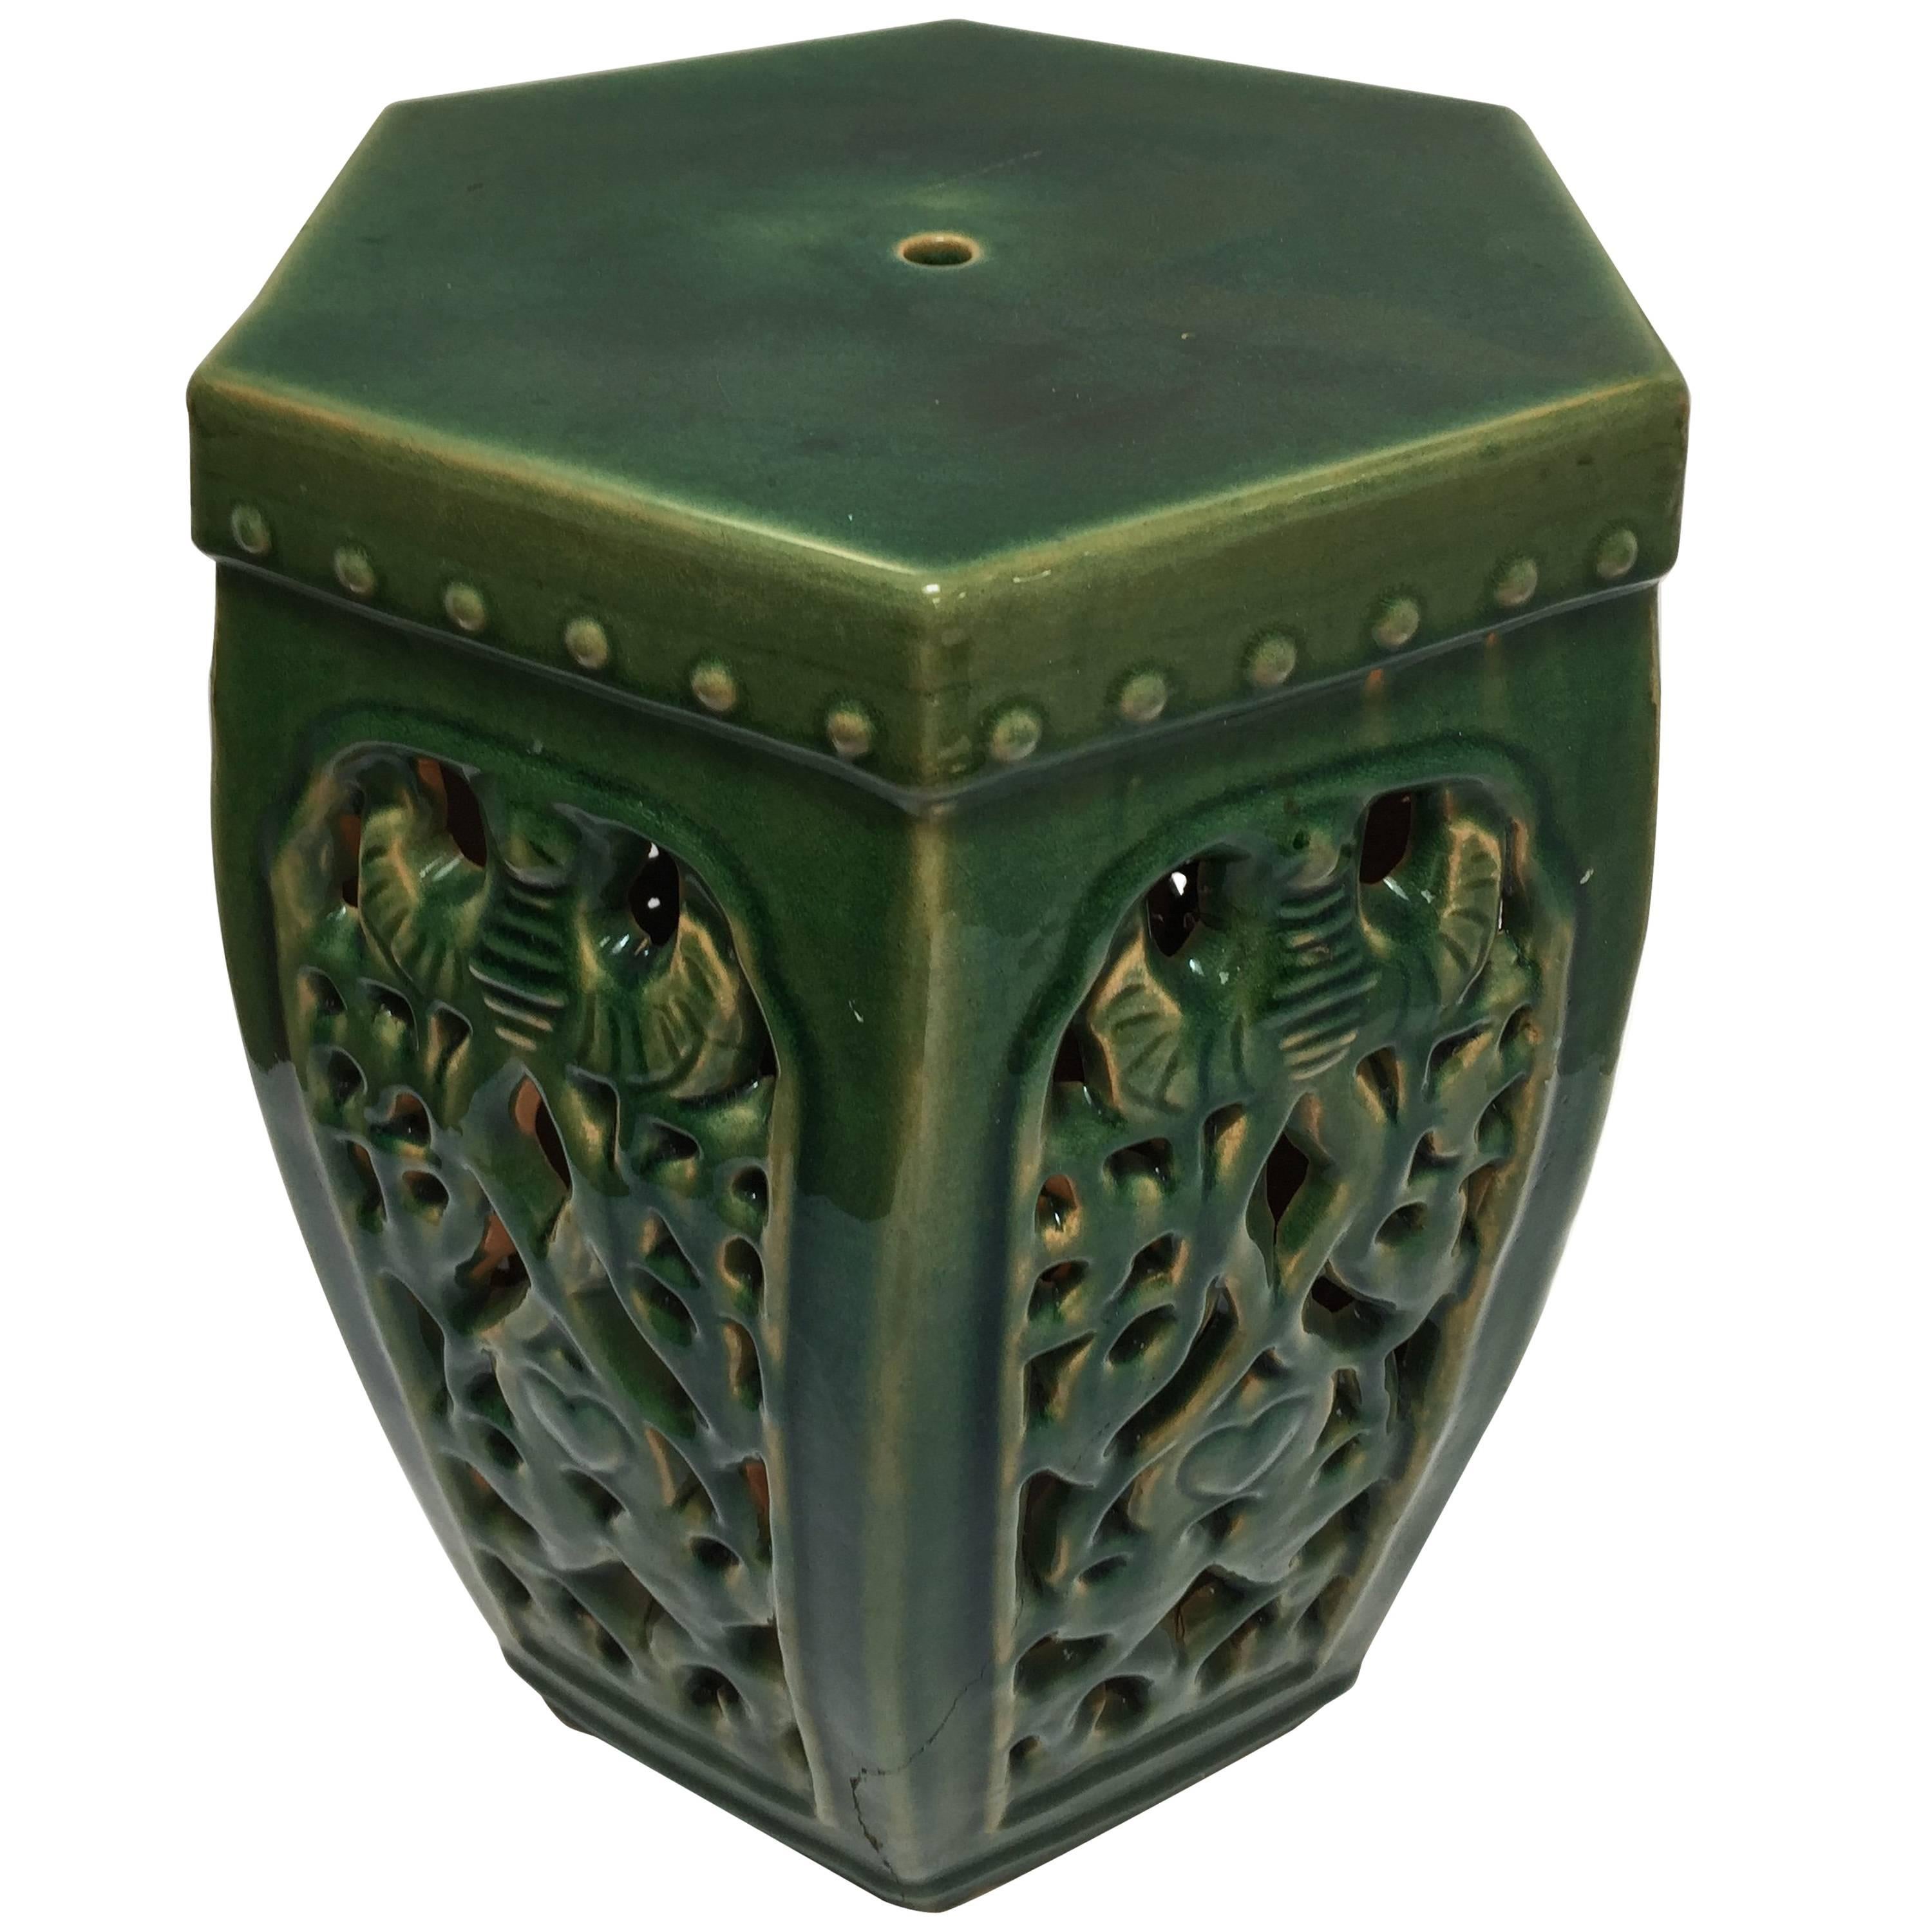 Green Chinese Barrel Ceramic Garden Stool